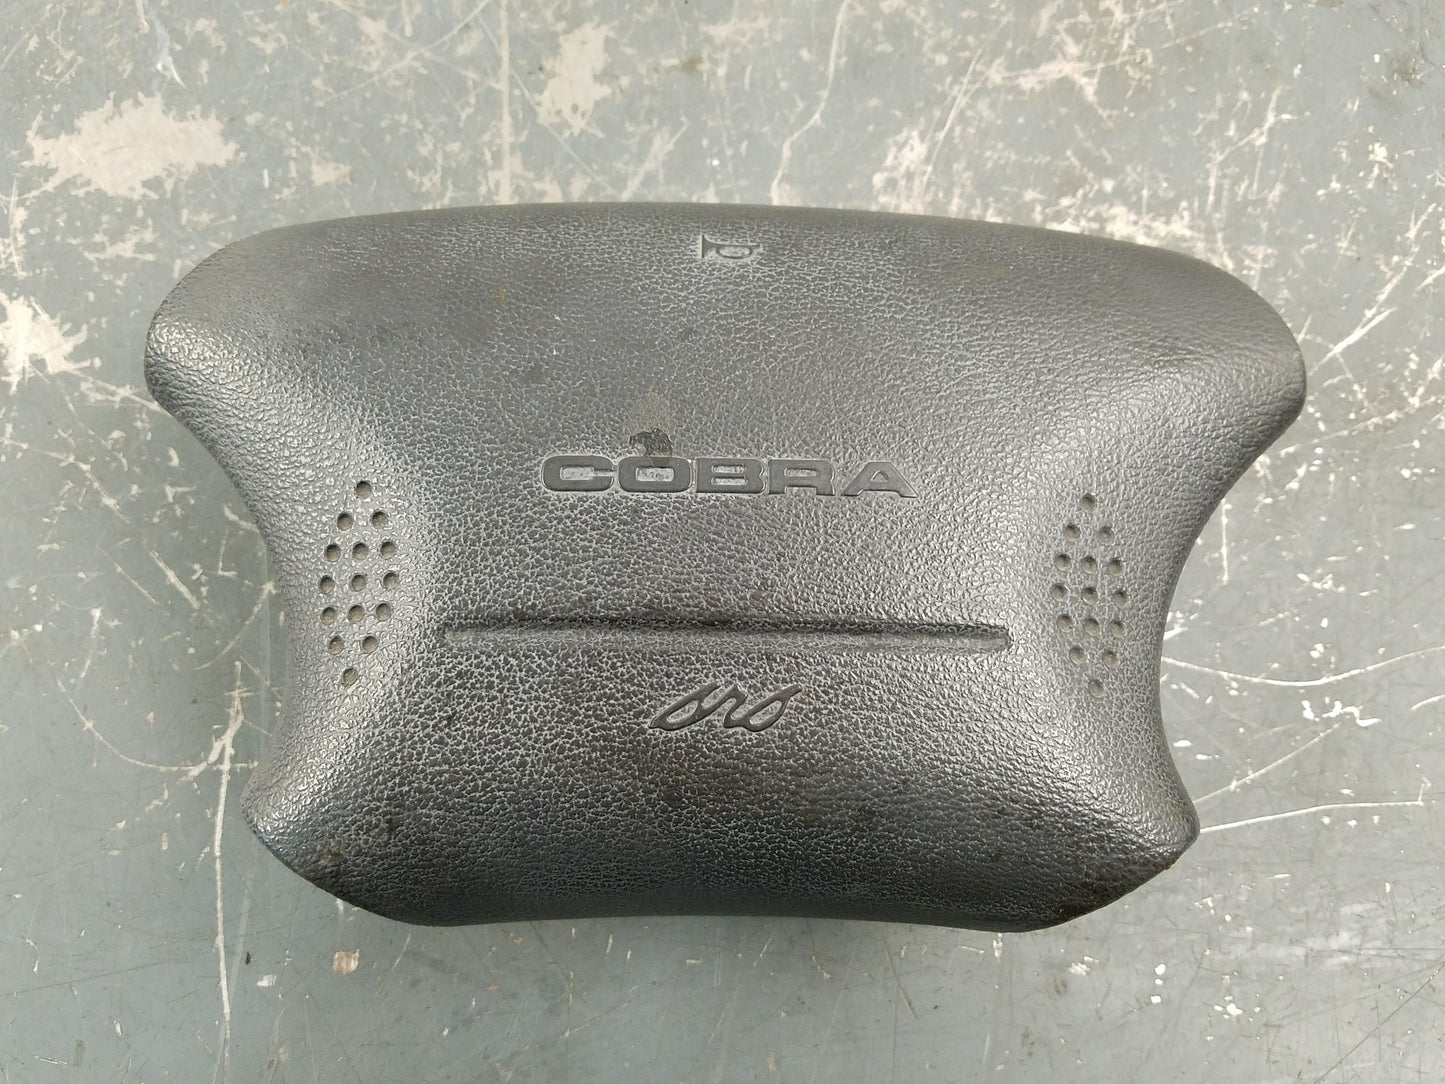 2001 Ford Mustang Cobra SVT Steering Wheel Airbag #6561 A9